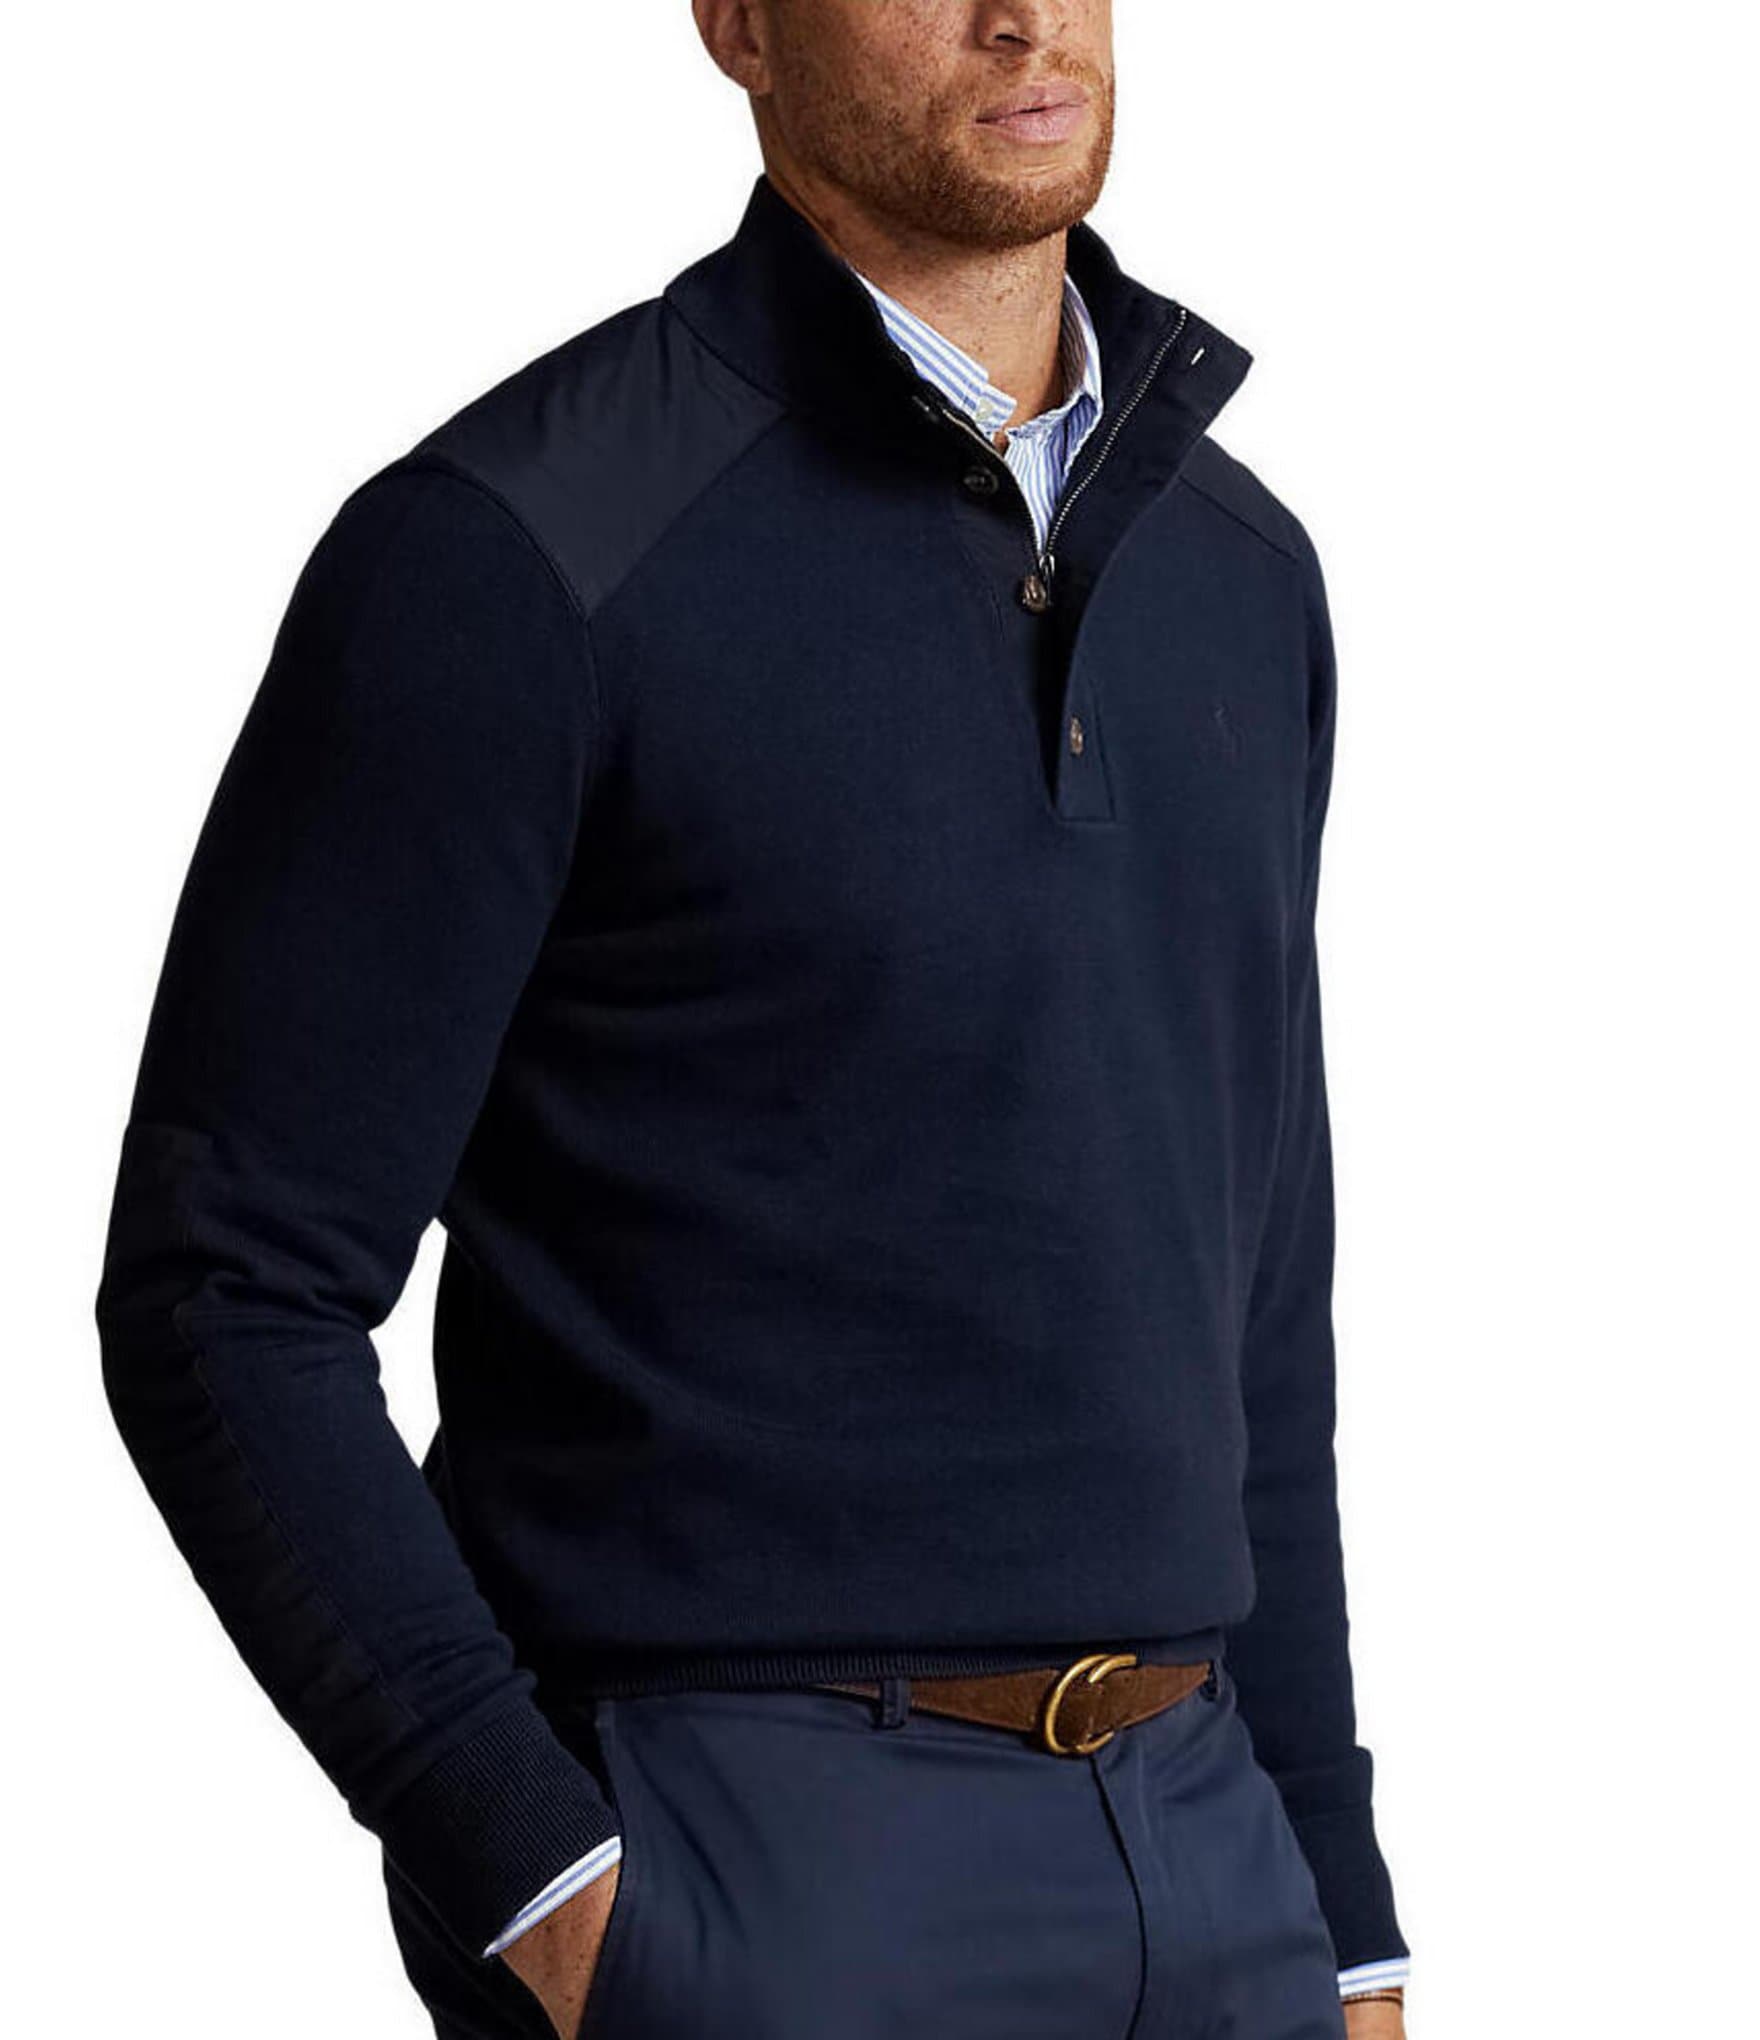 Hybrid Cotton Cardigan - Men - Ready-to-Wear